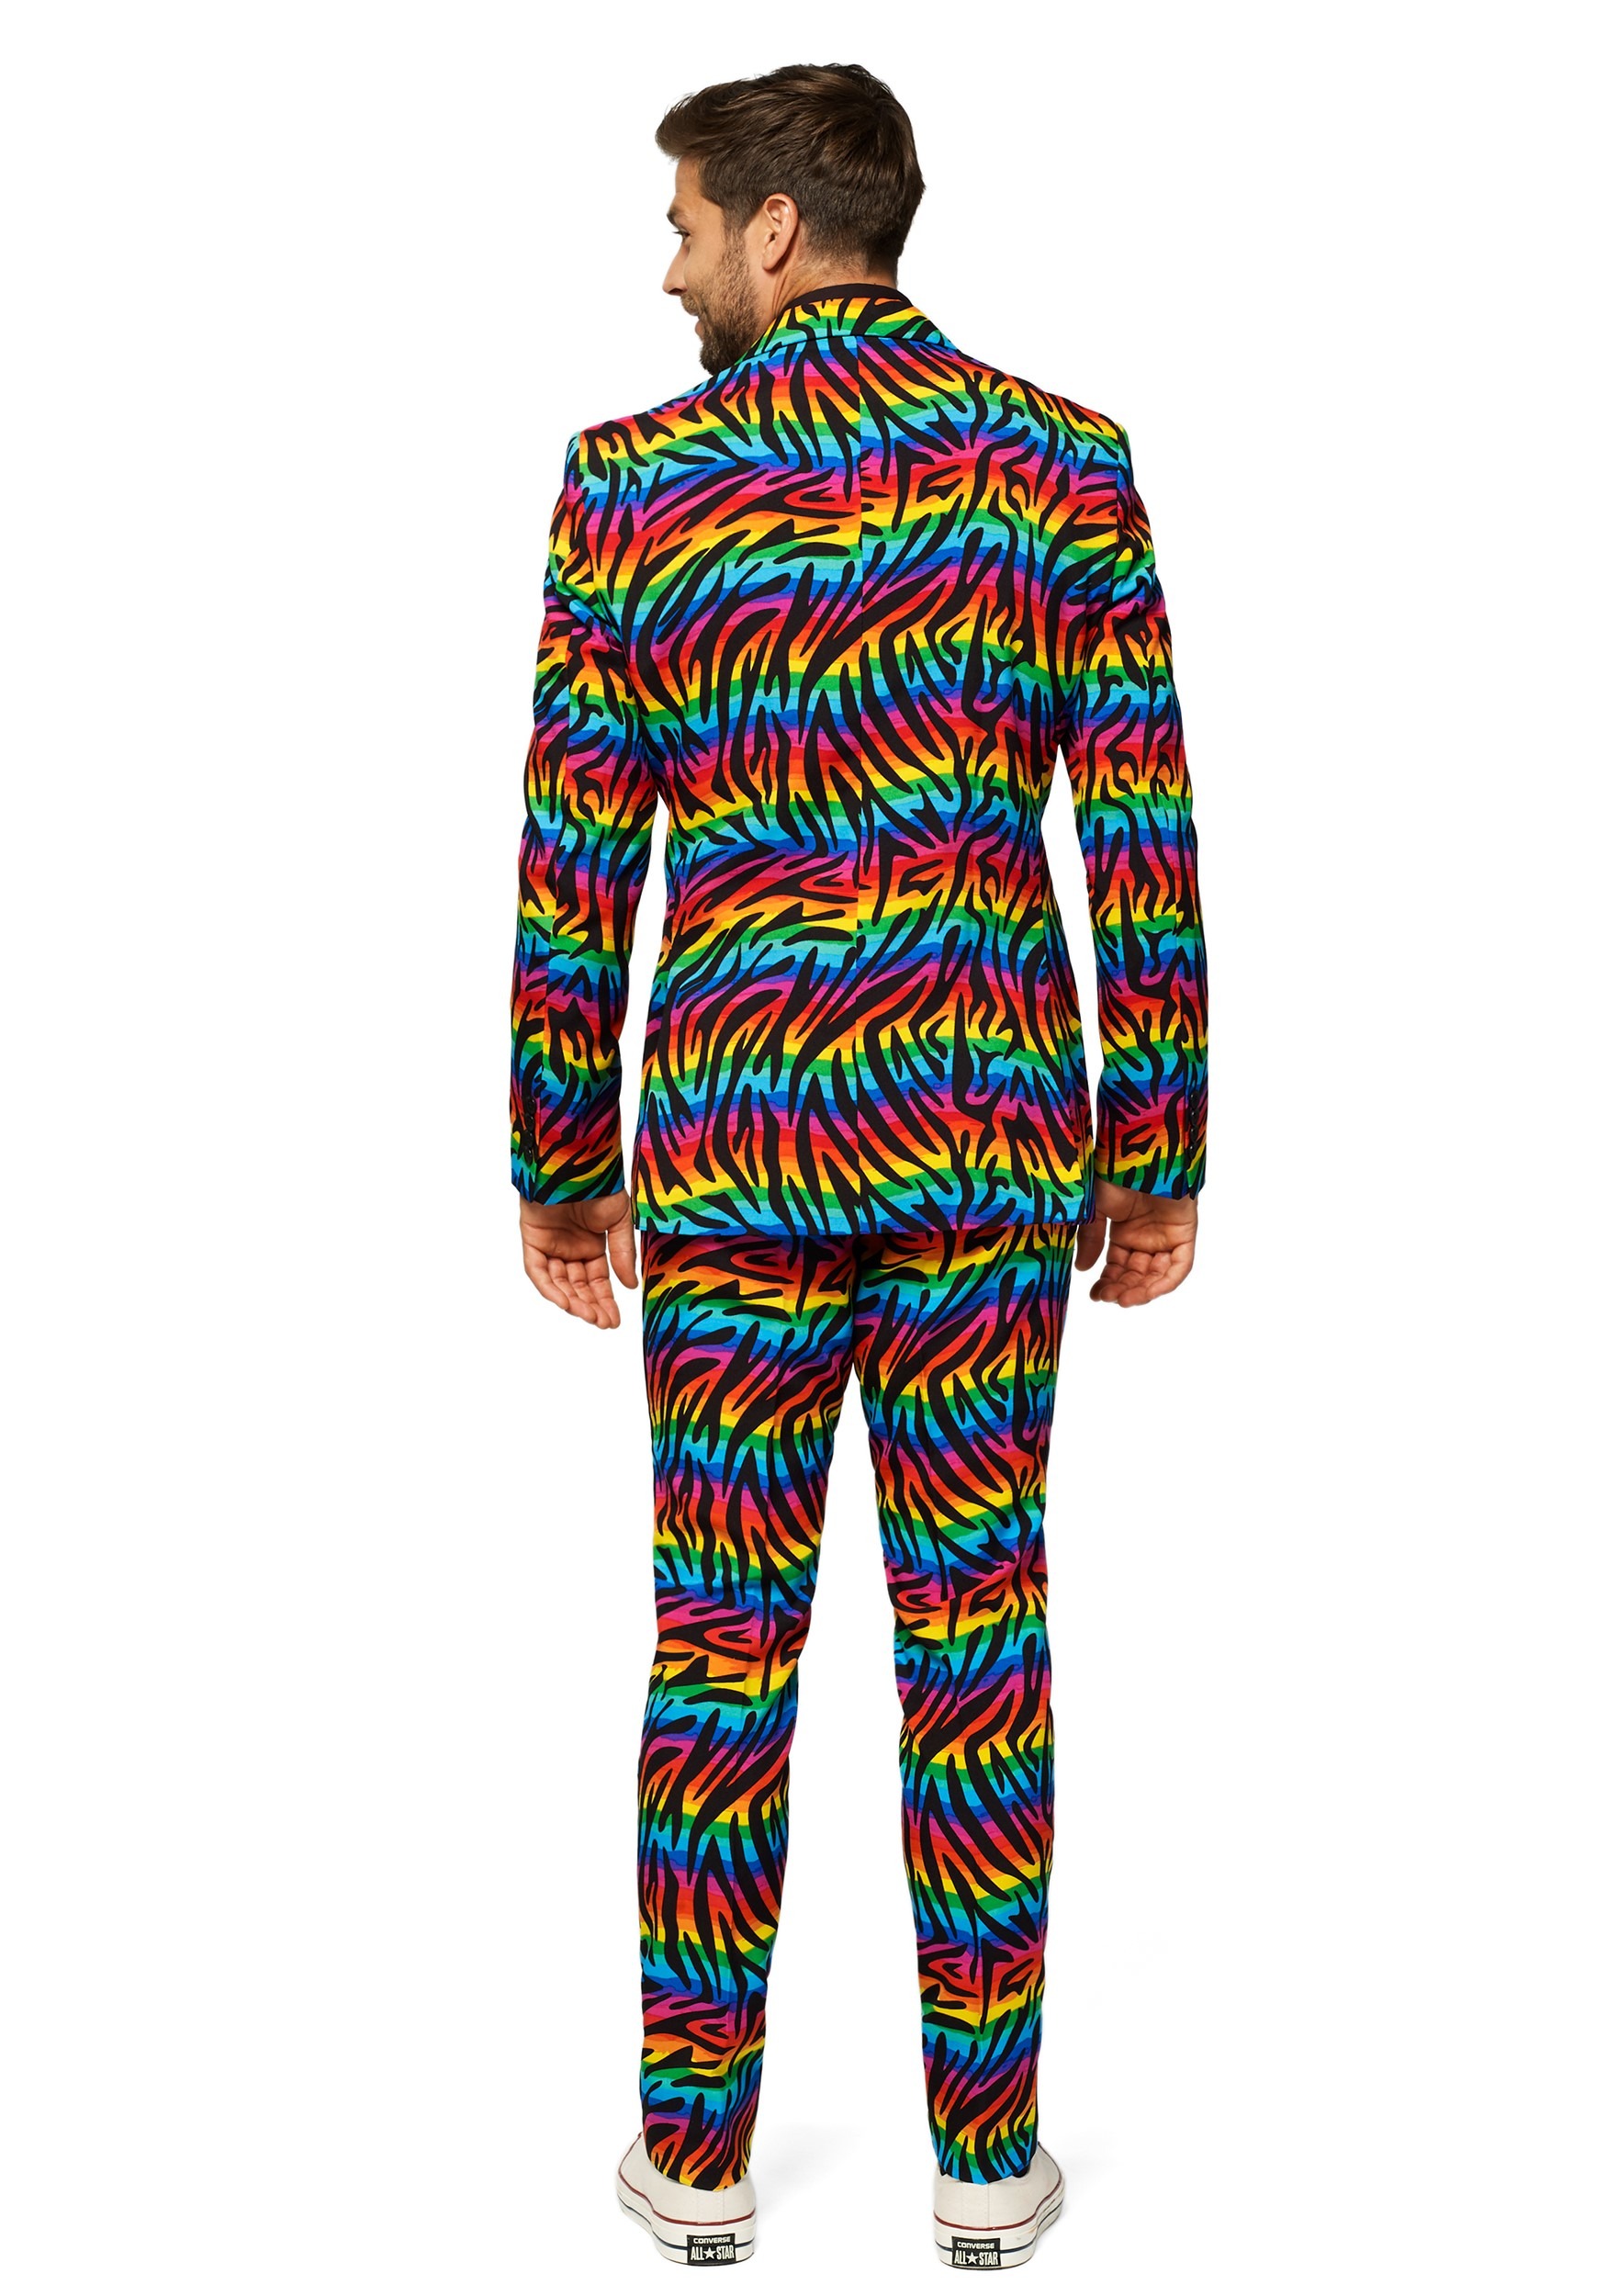 OppoSuits Wild Rainbow Men's Fancy Dress Costume Suit